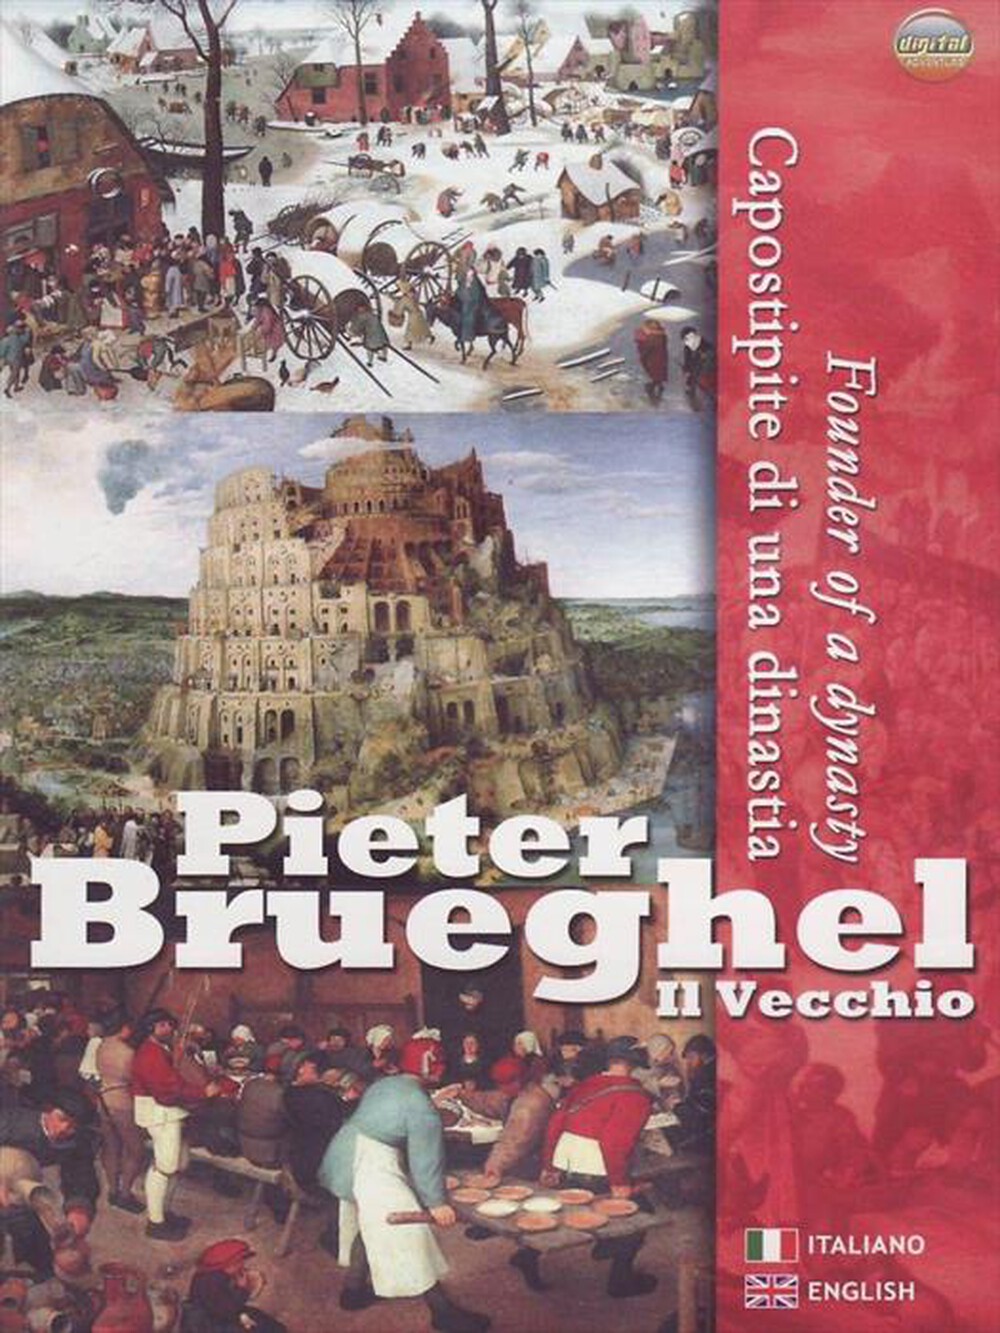 "CINEHOLLYWOOD - Pieter Brueghel Il Vecchio"